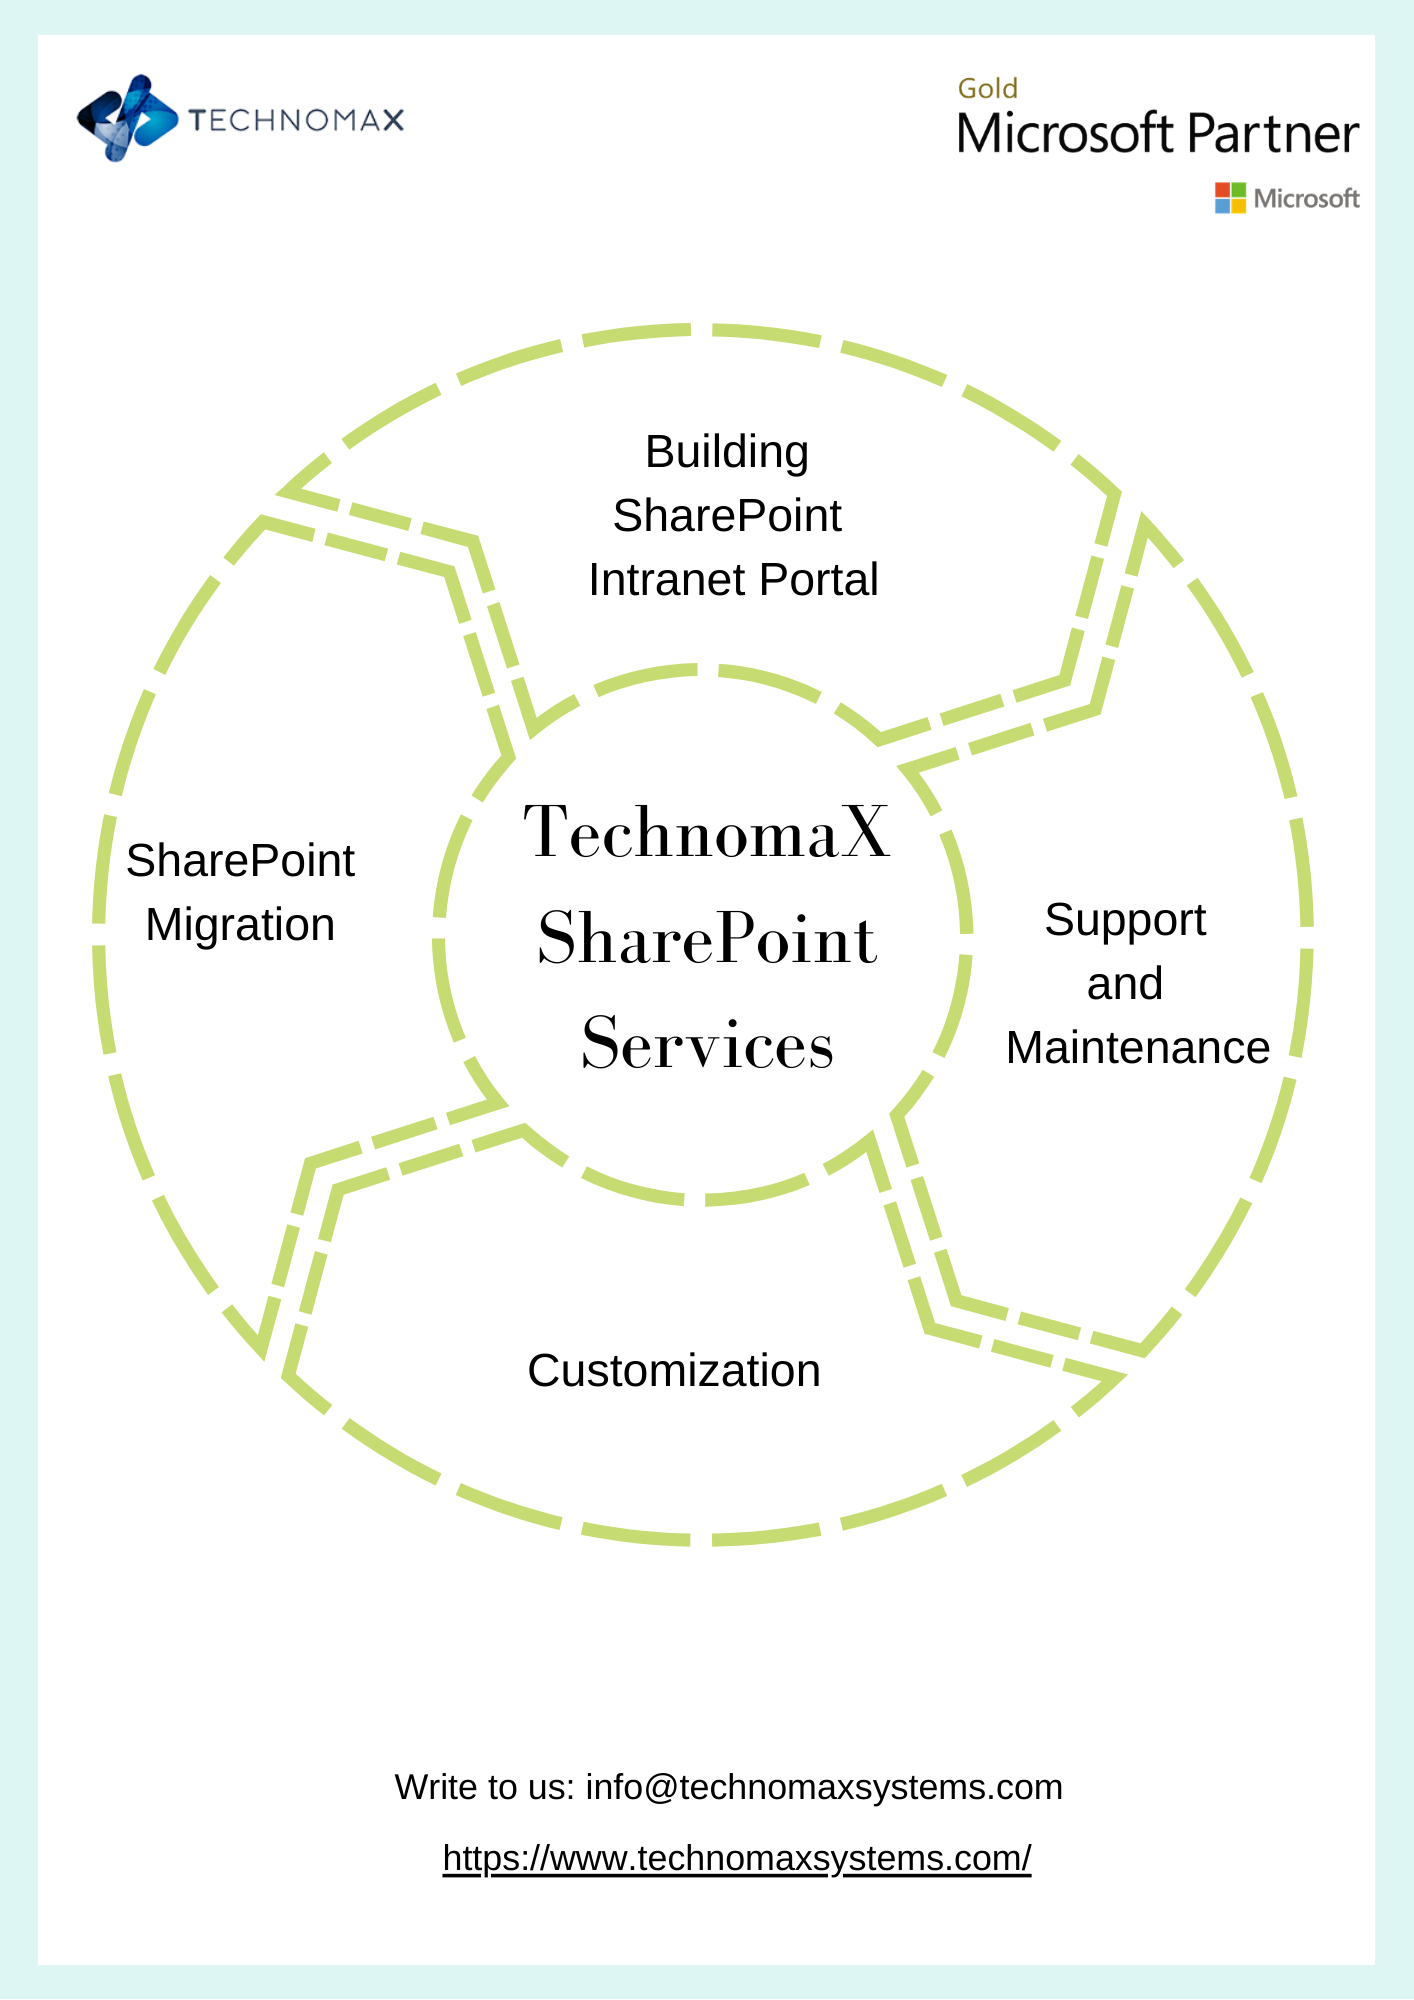 TechnomaX SharePoint Services